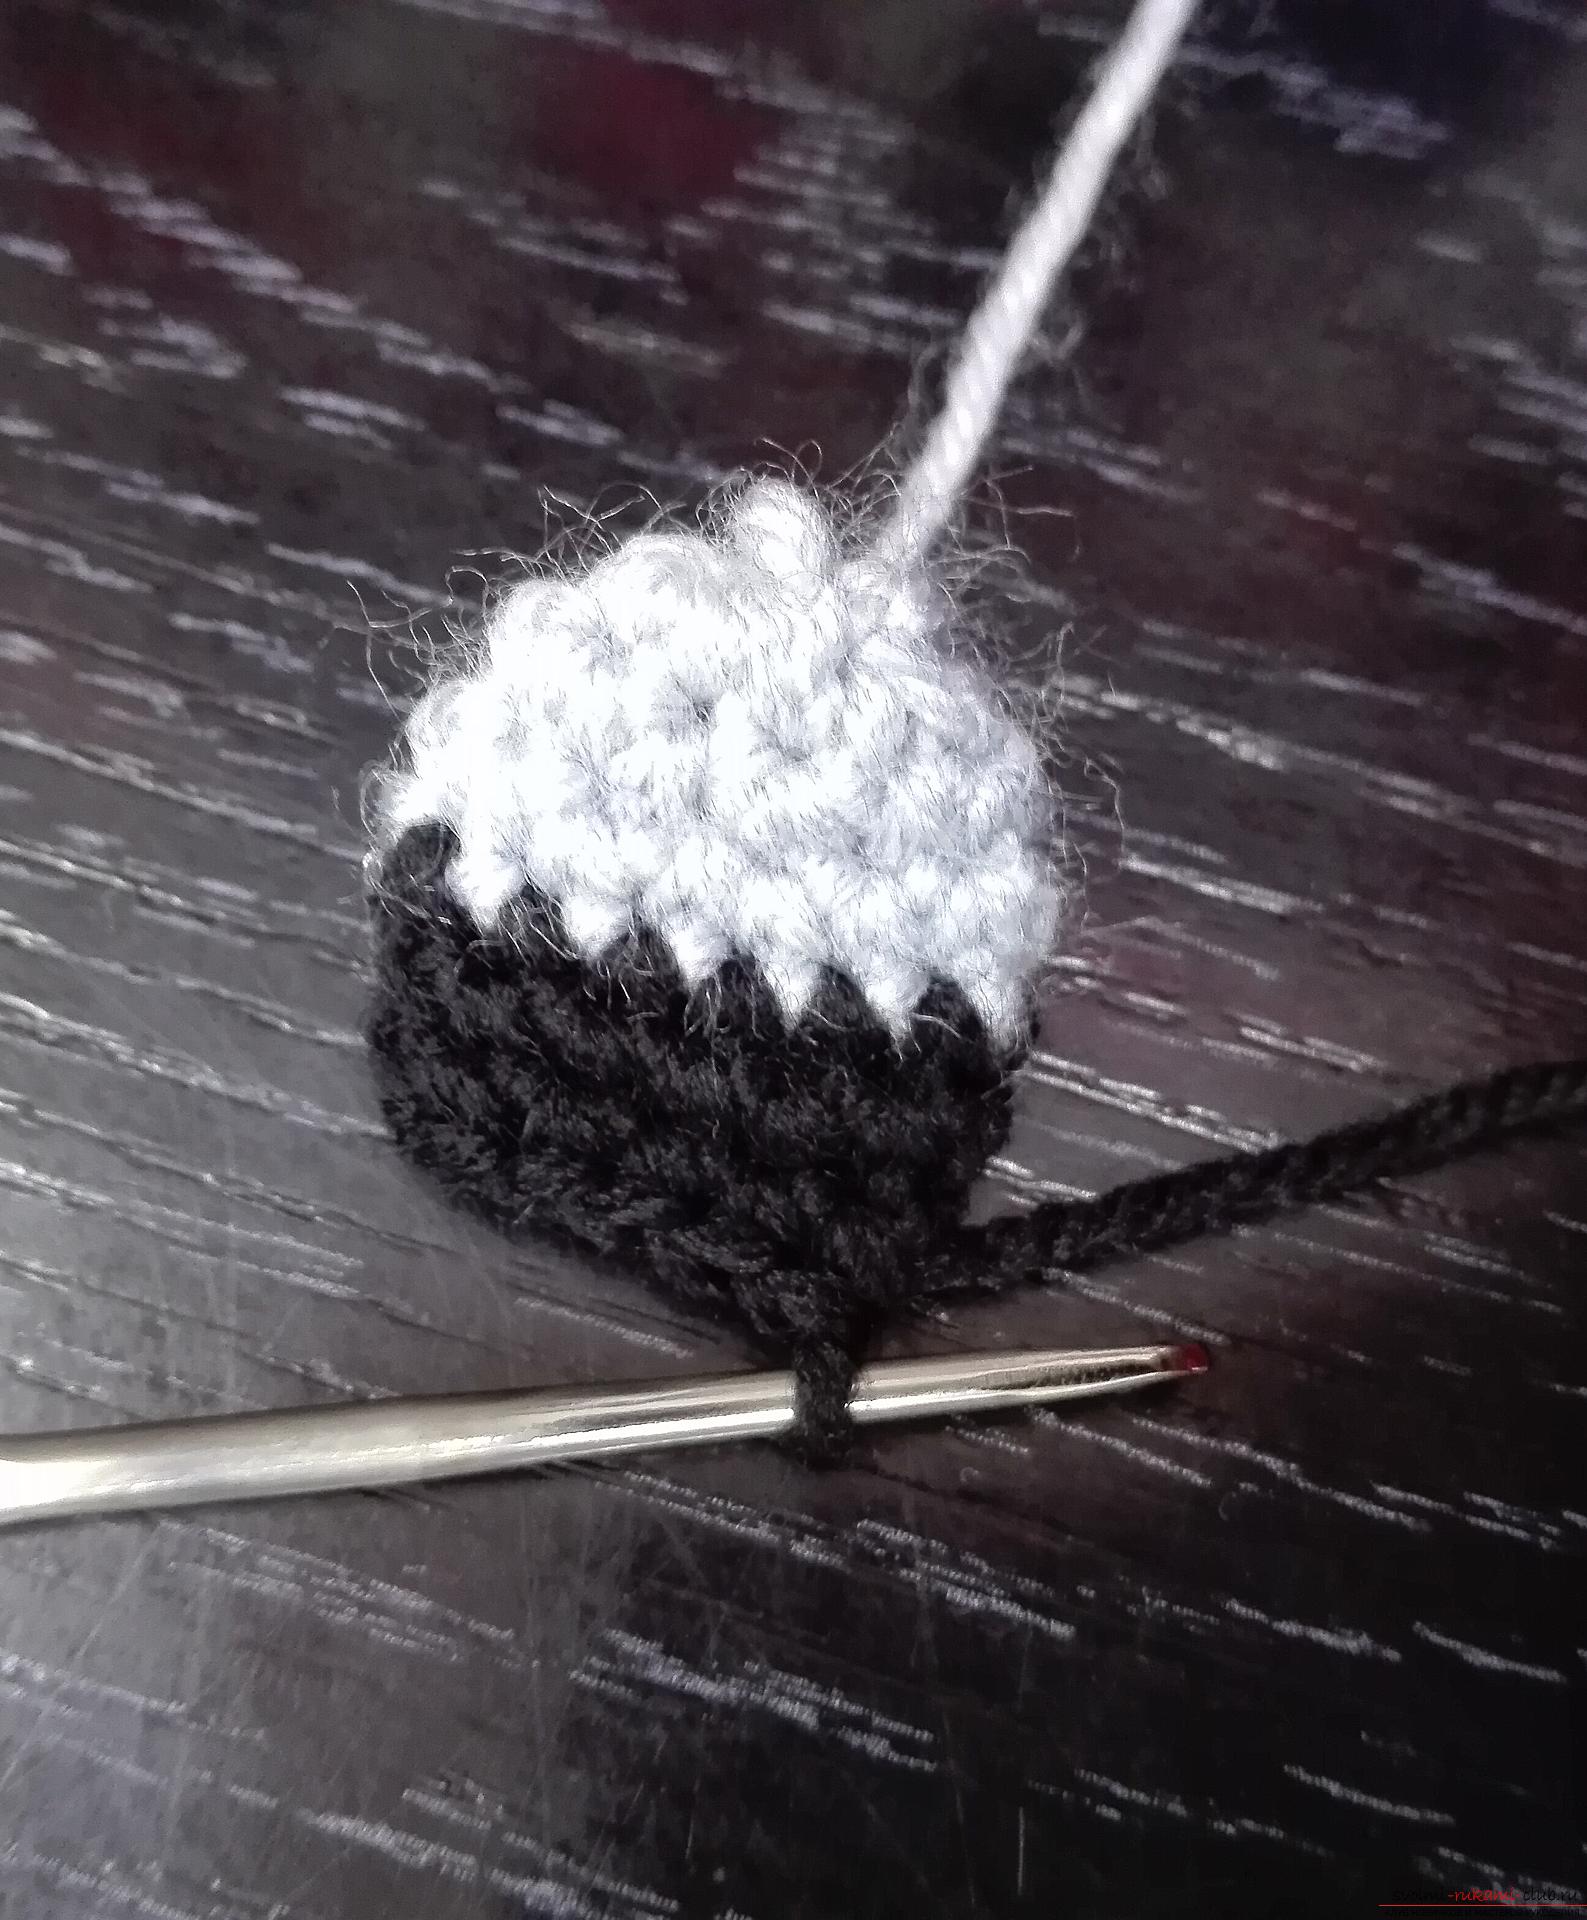 This master class will teach crochet crochet toys, you can create a cat crochet.